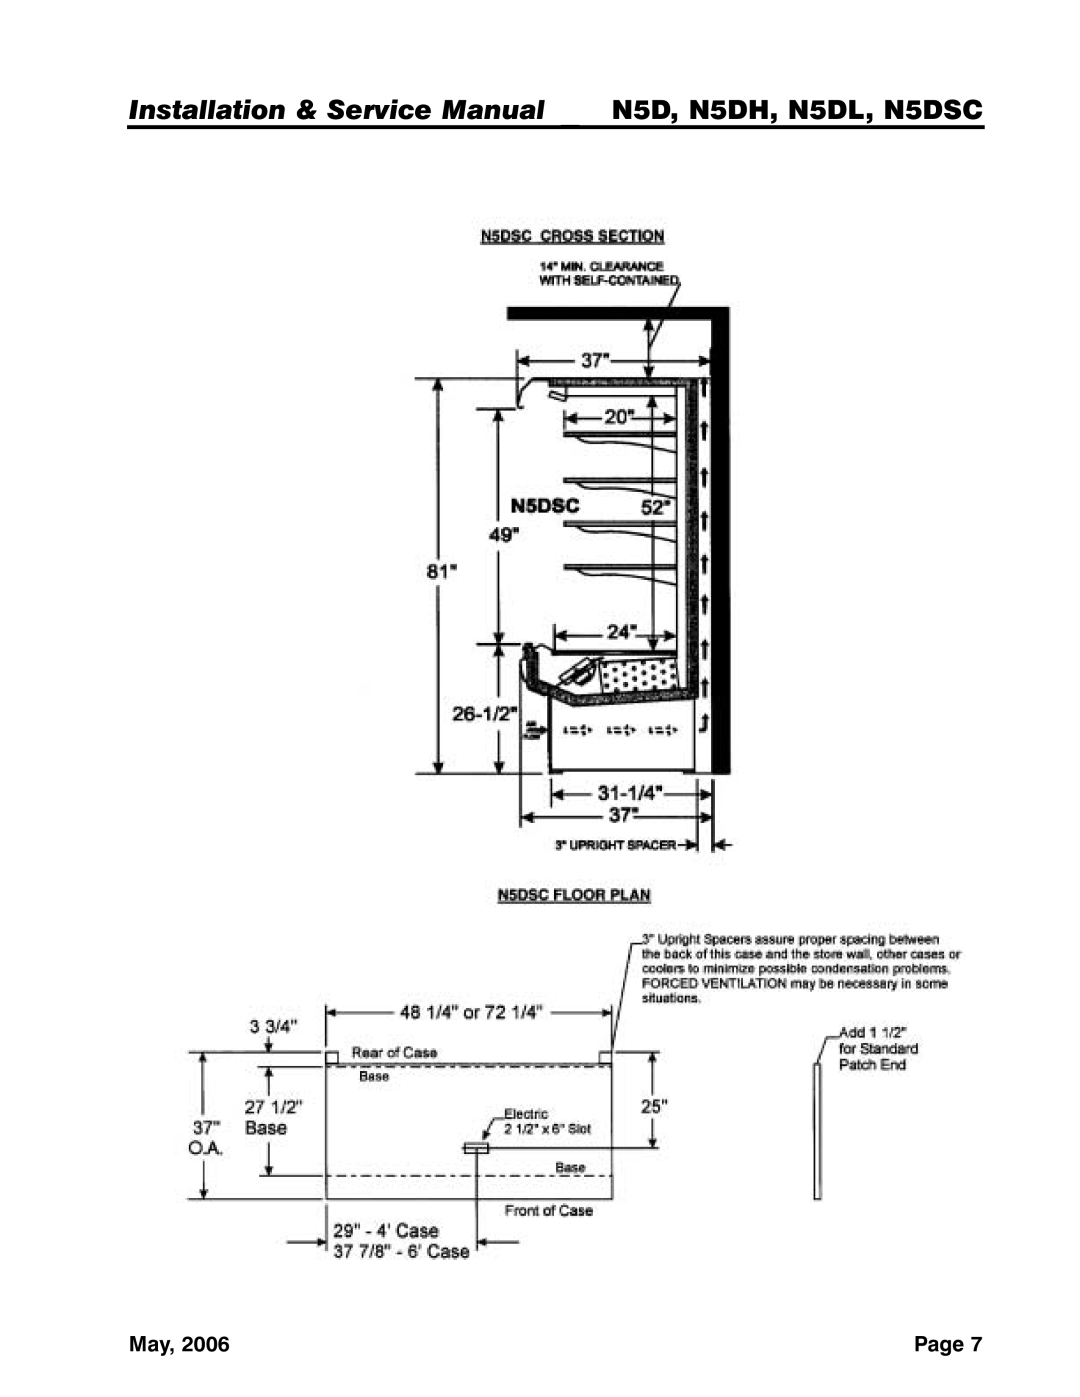 Tyler Refrigeration service manual N5D, N5DH, N5DL, N5DSC, May, Page 